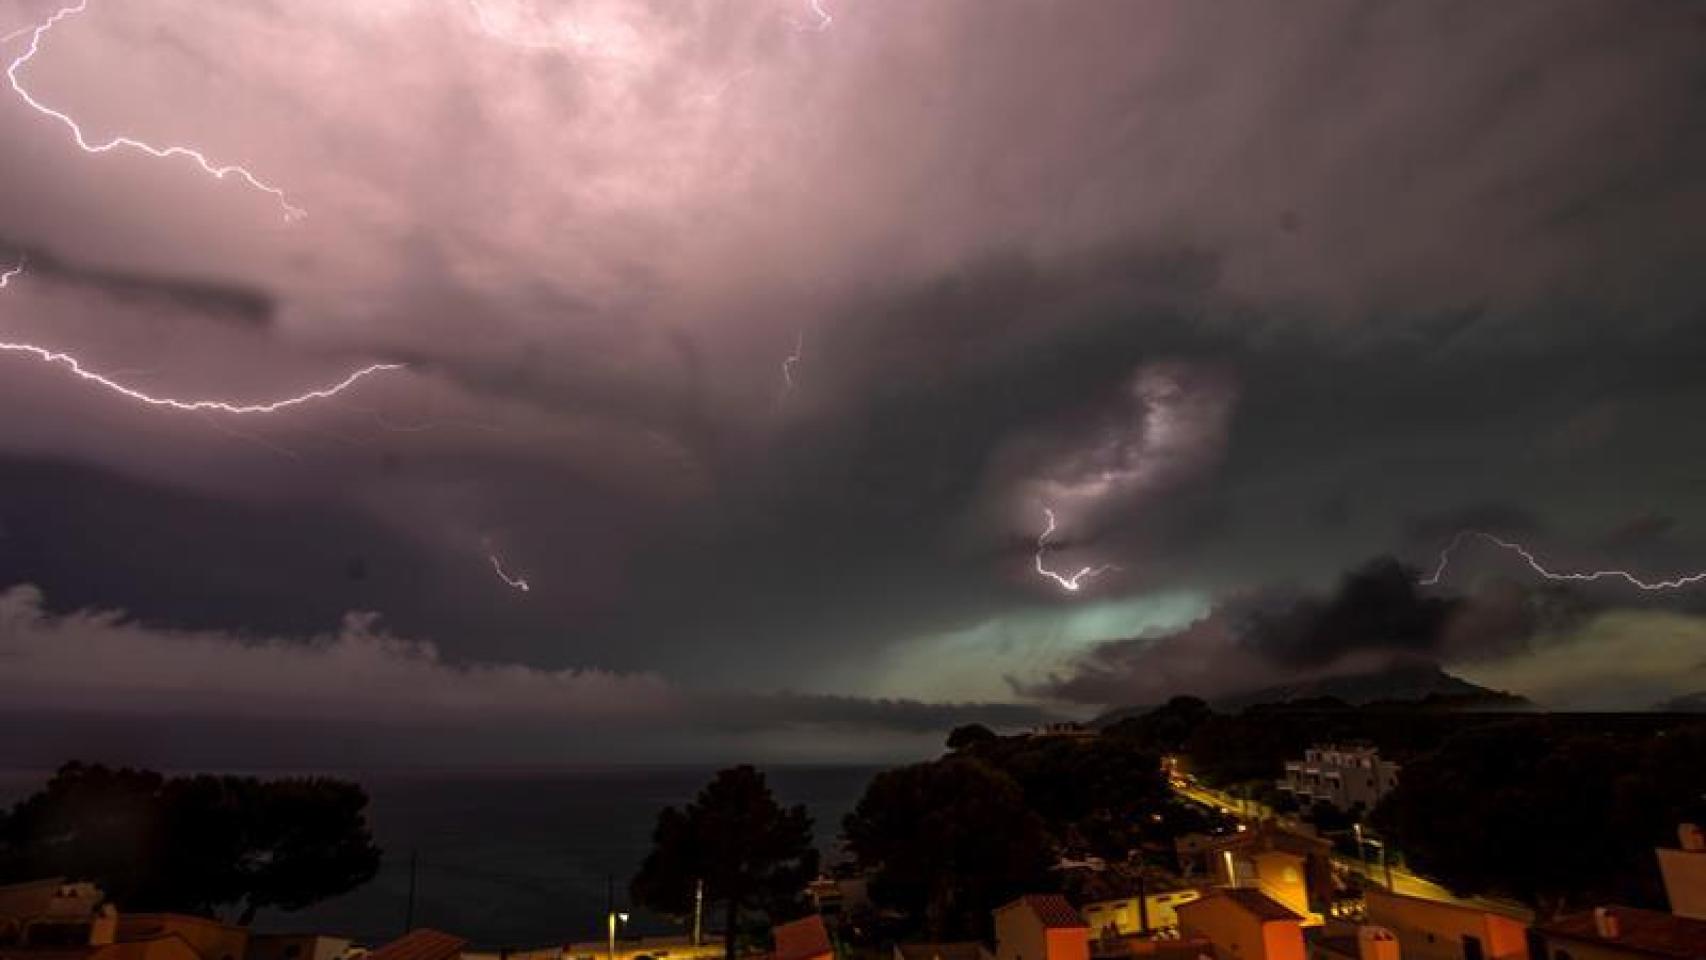 Vista de una tormenta eléctrica en la isla balear de Mallorca.